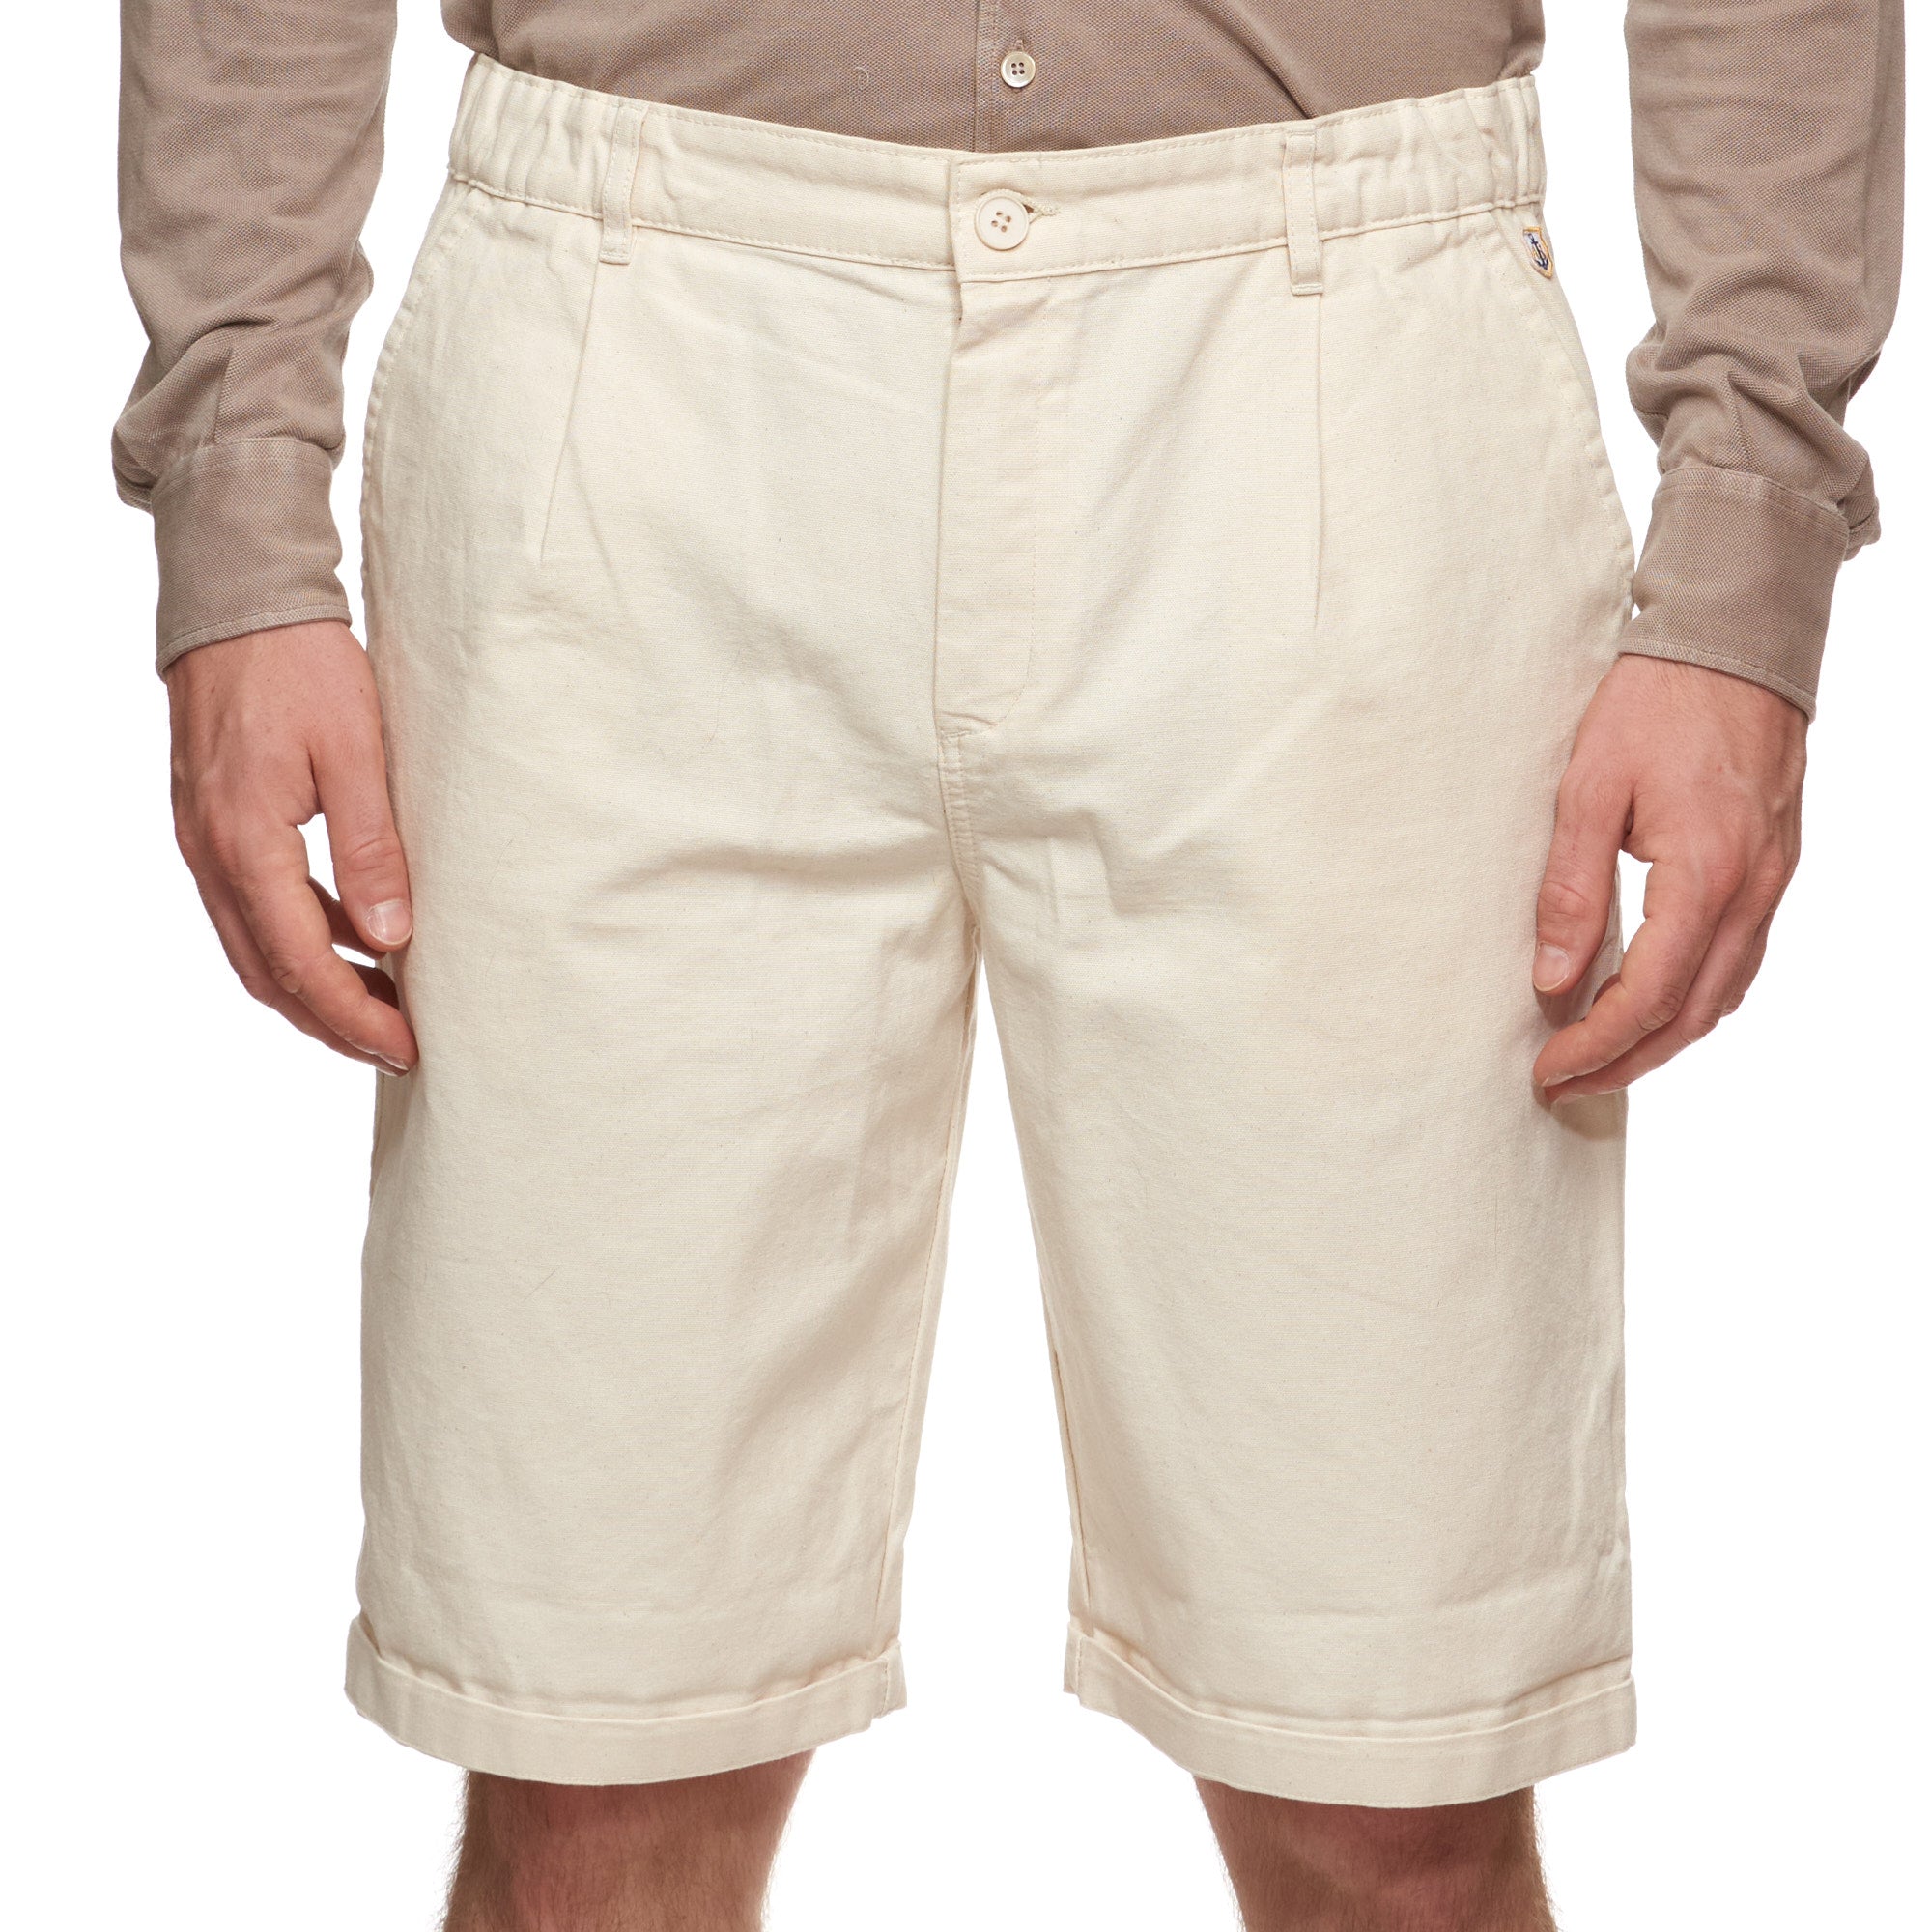 ARMOR LUX Beige Cotton Bermuda Shorts FR 44 US 34 ARMOR LUX